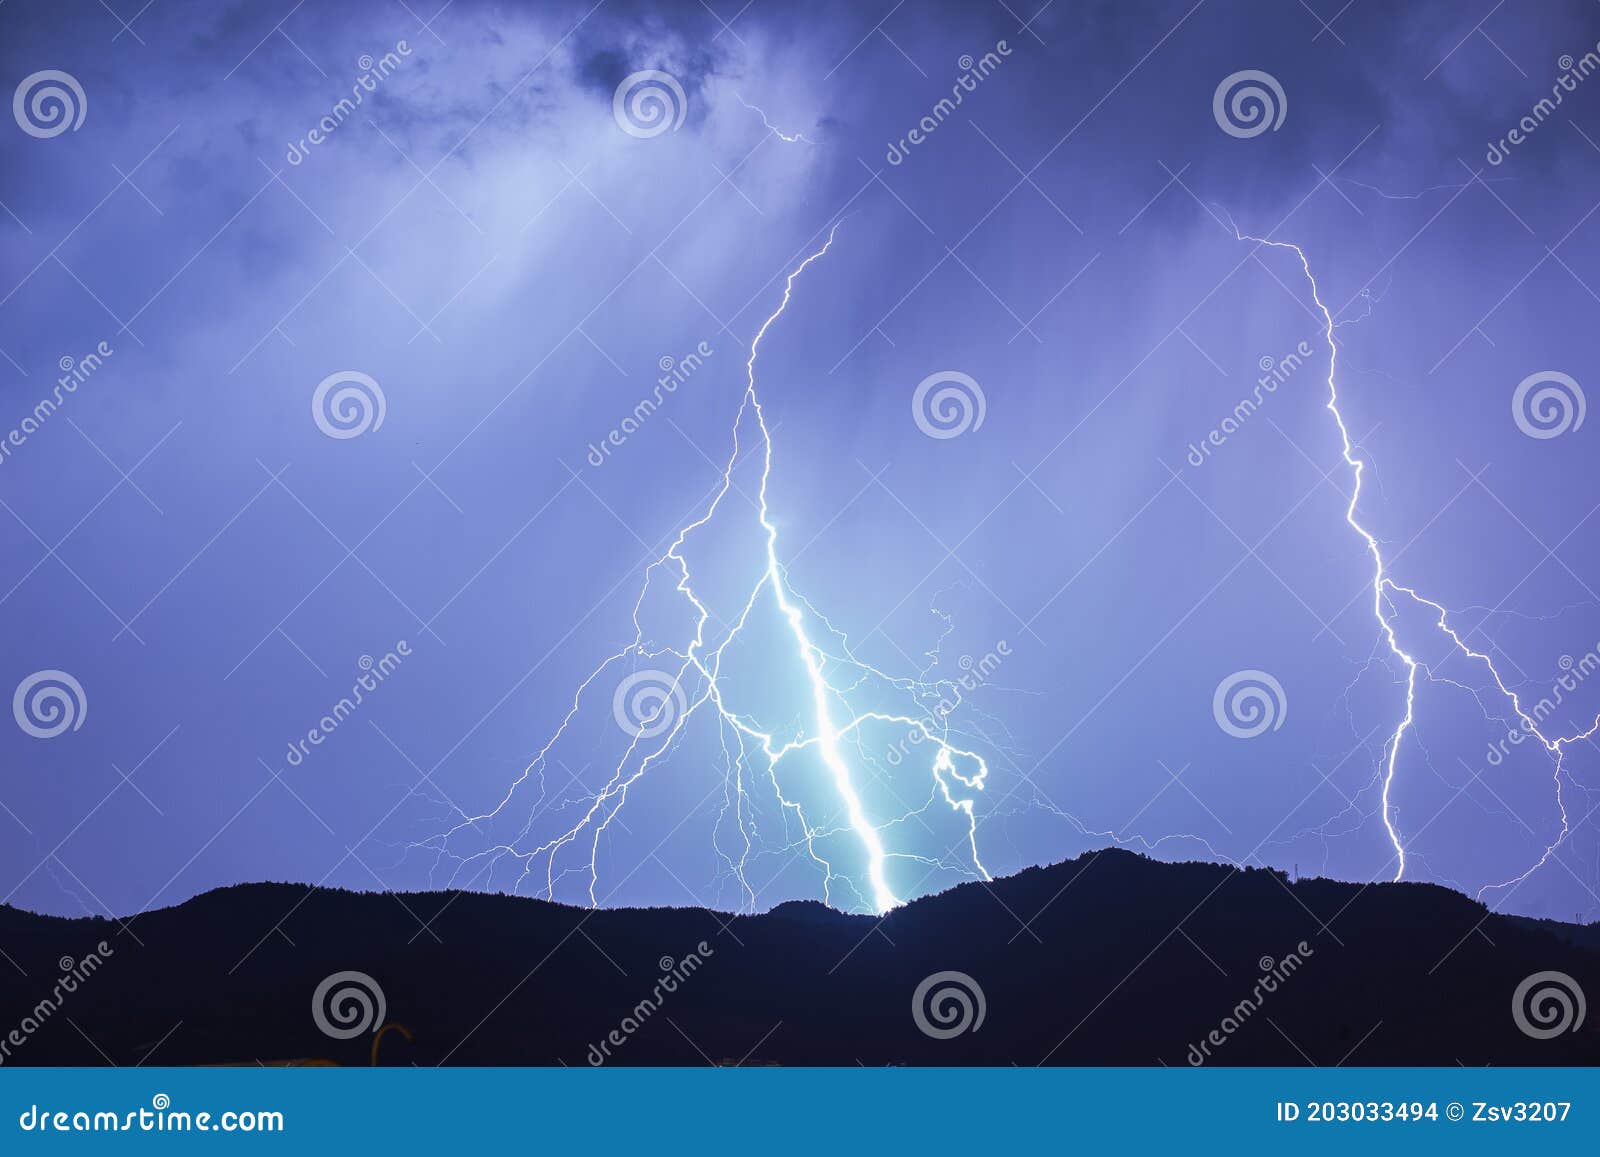 Tampa Bay Lightning Wallpaper: Be the Thunder  Tampa bay lightning,  Lightning photography, Thunder and lightning